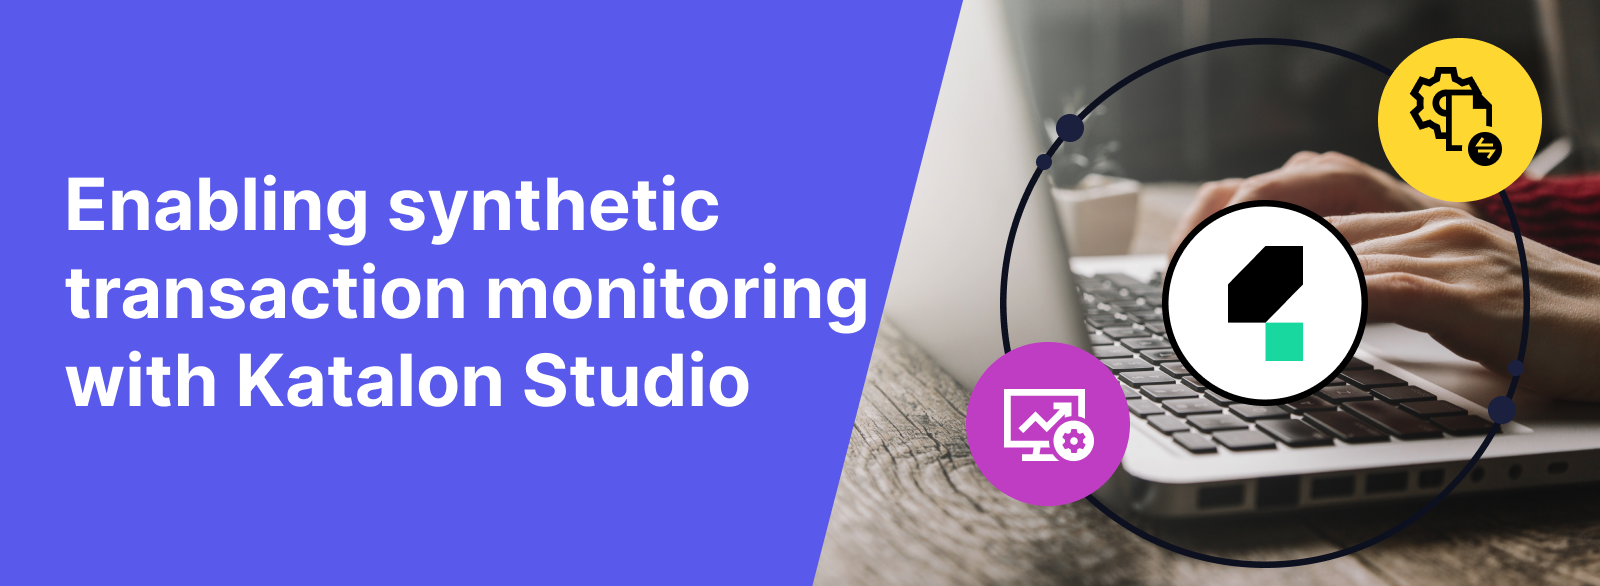 Enabling Synthetic Transaction Monitoring with Katalon Studio